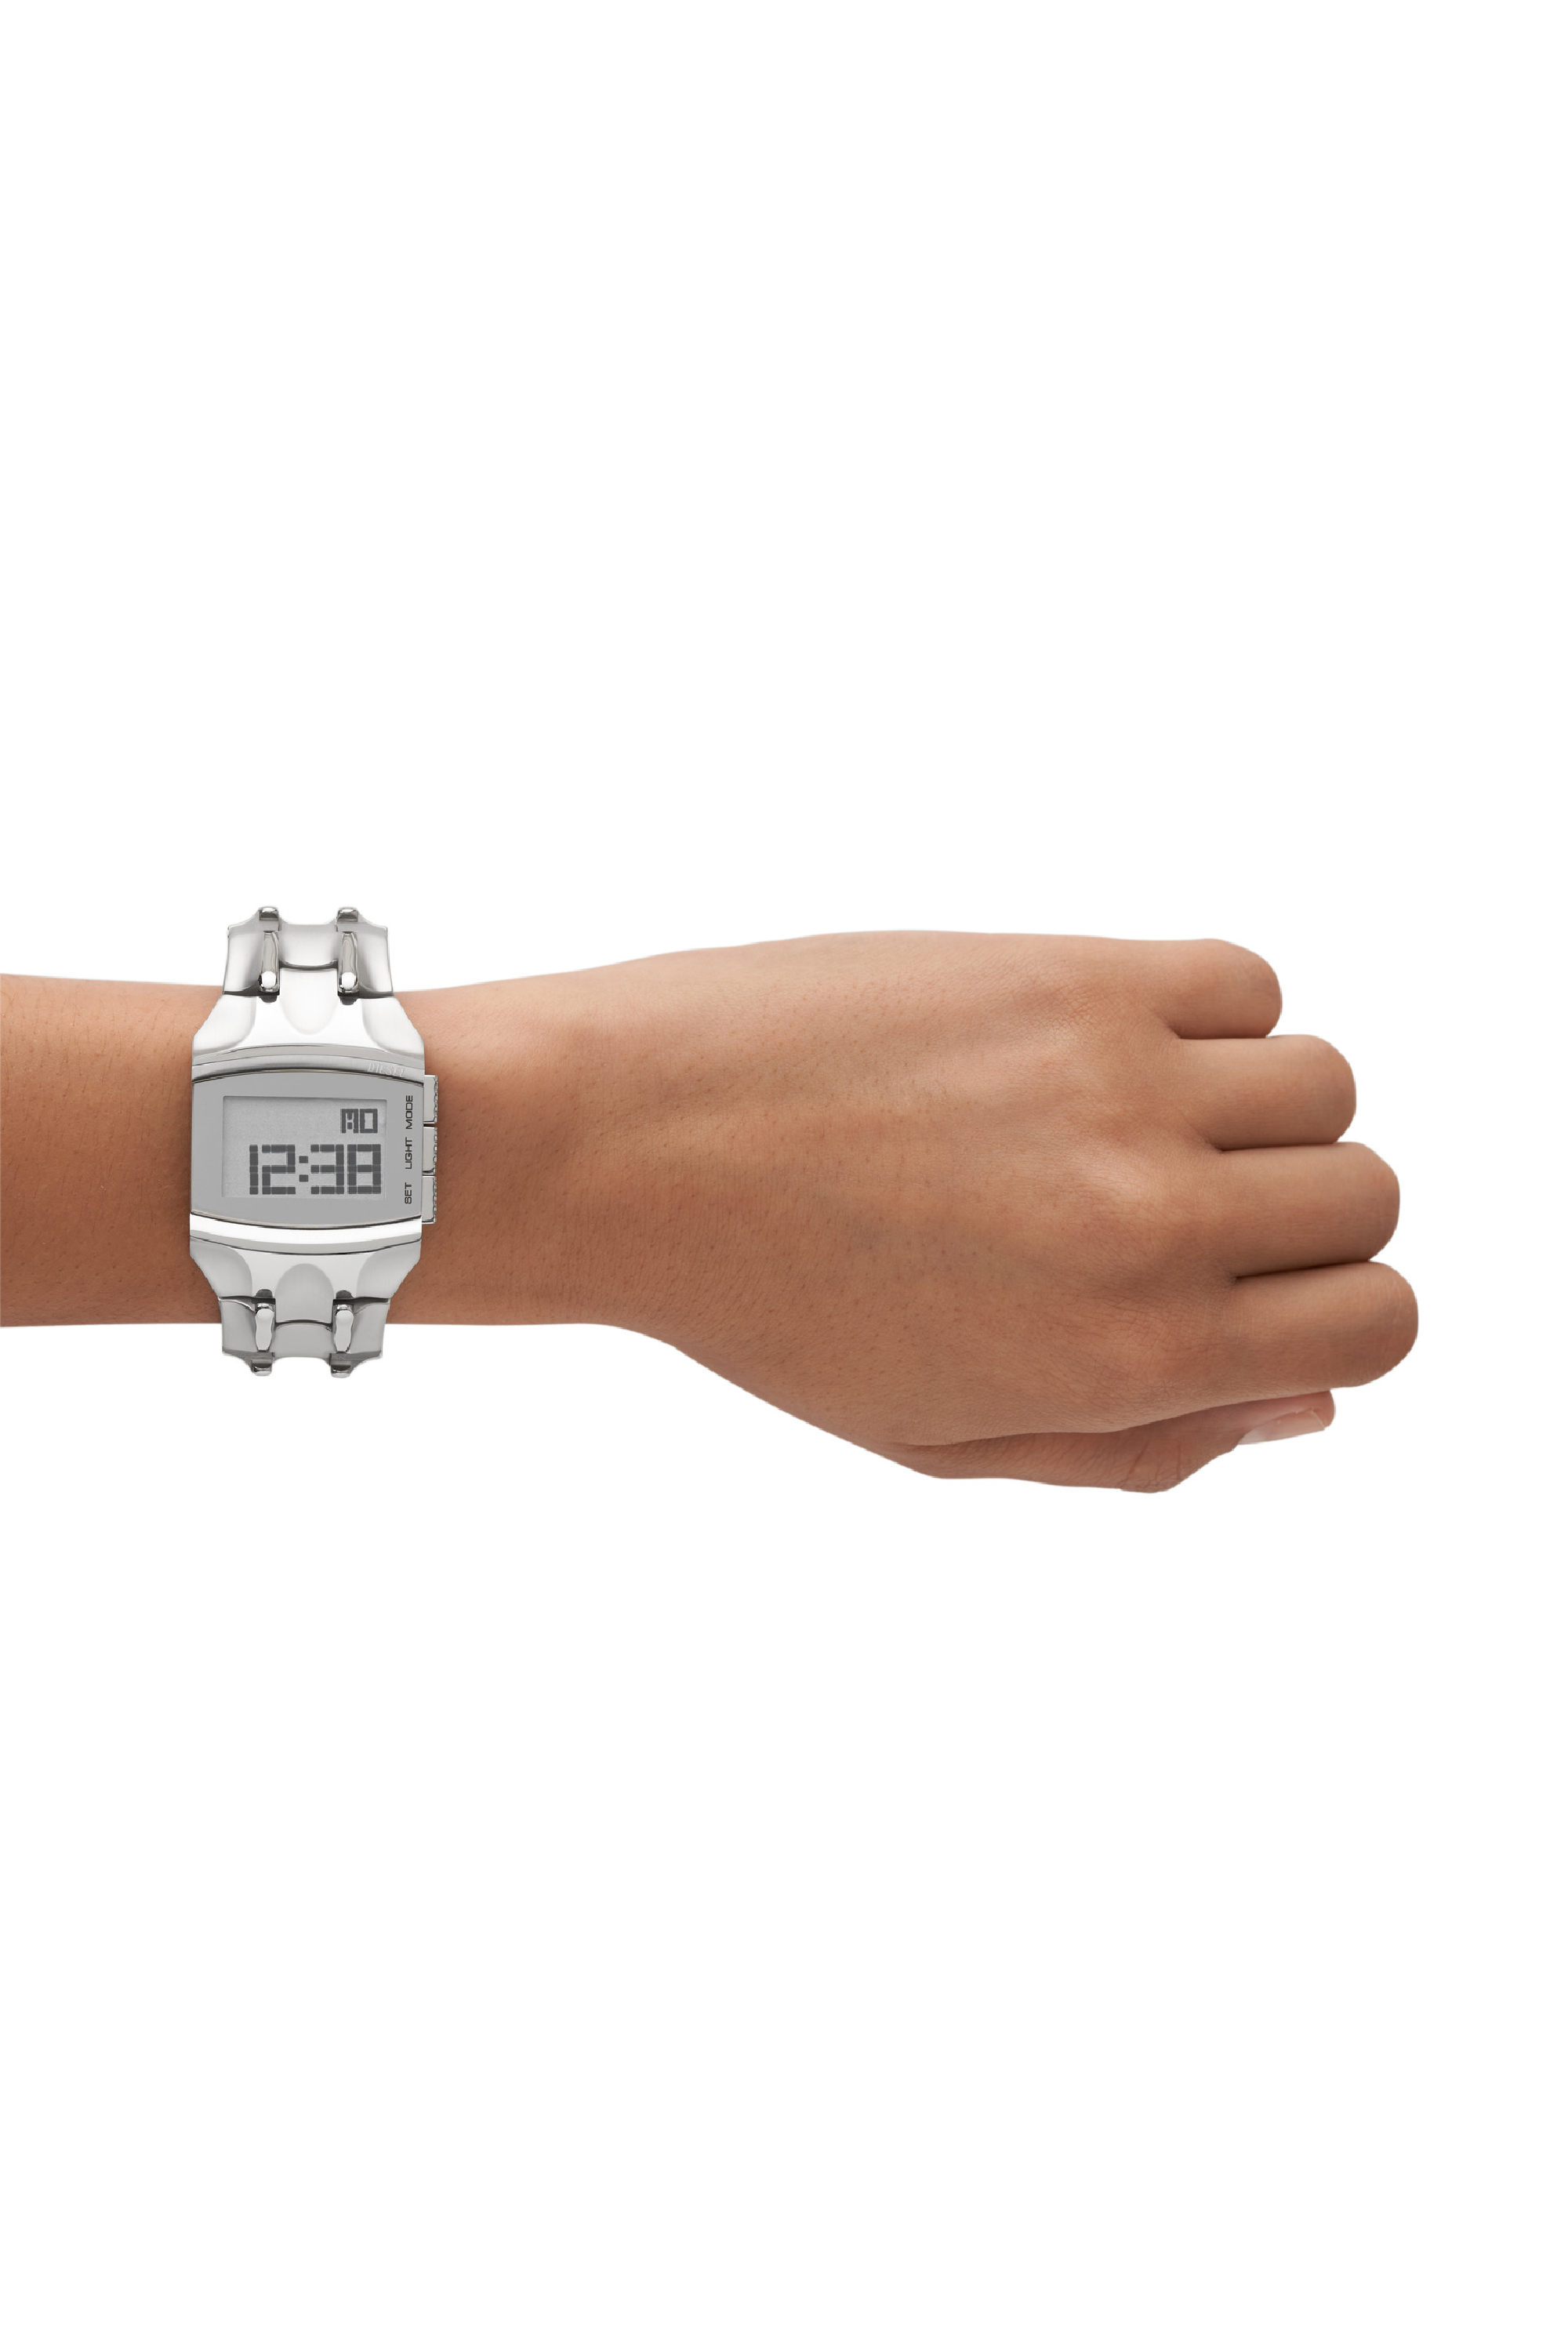 Diesel - DZ2155, Unisex Croco Digital stainless steel watch in Silver - Image 4